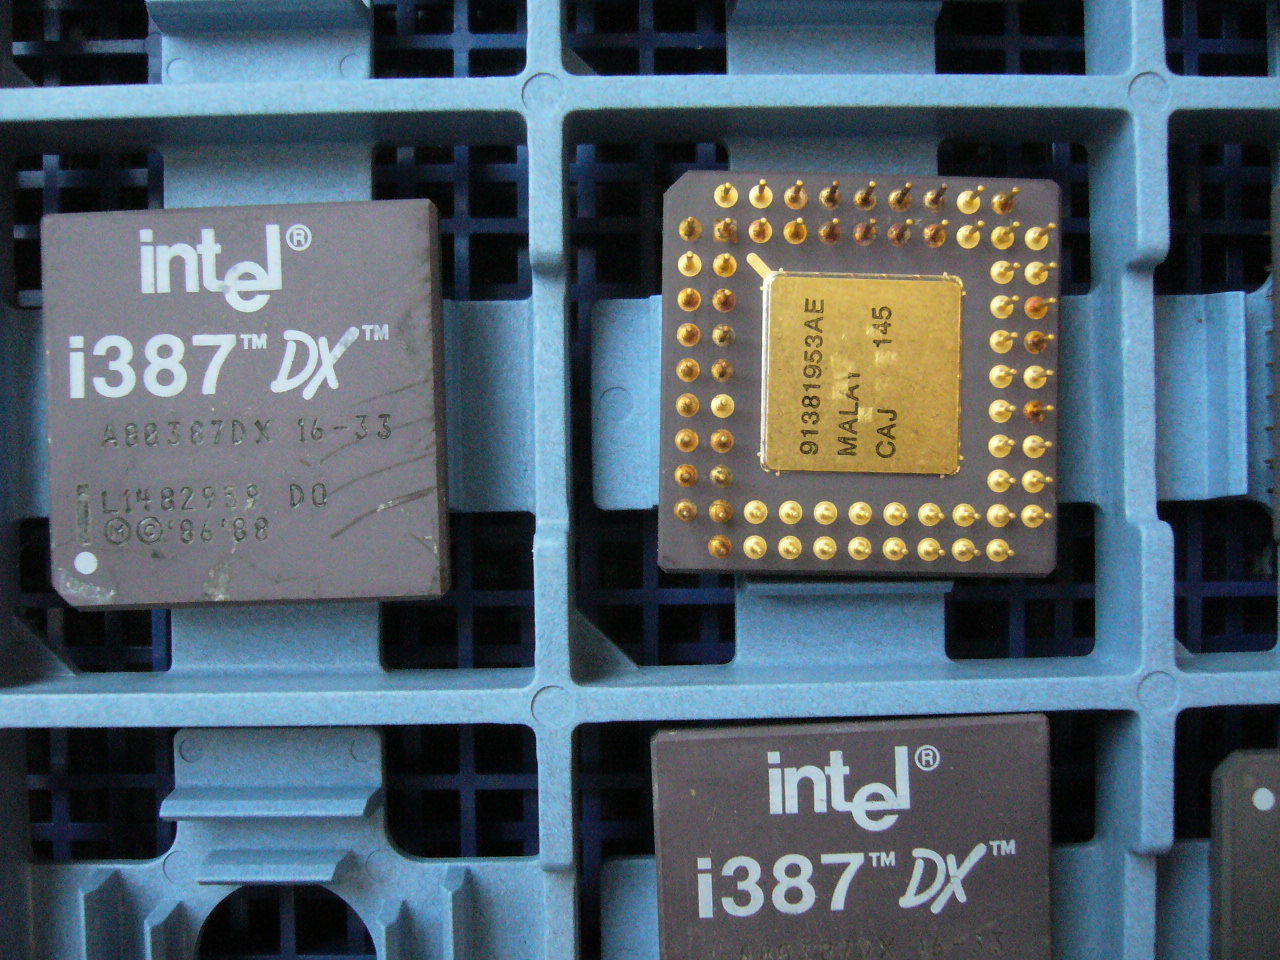 QTY 1x Vintage INTEL i387 DX 33Mhz NPU # A80387DX 16-33 CoProcessor